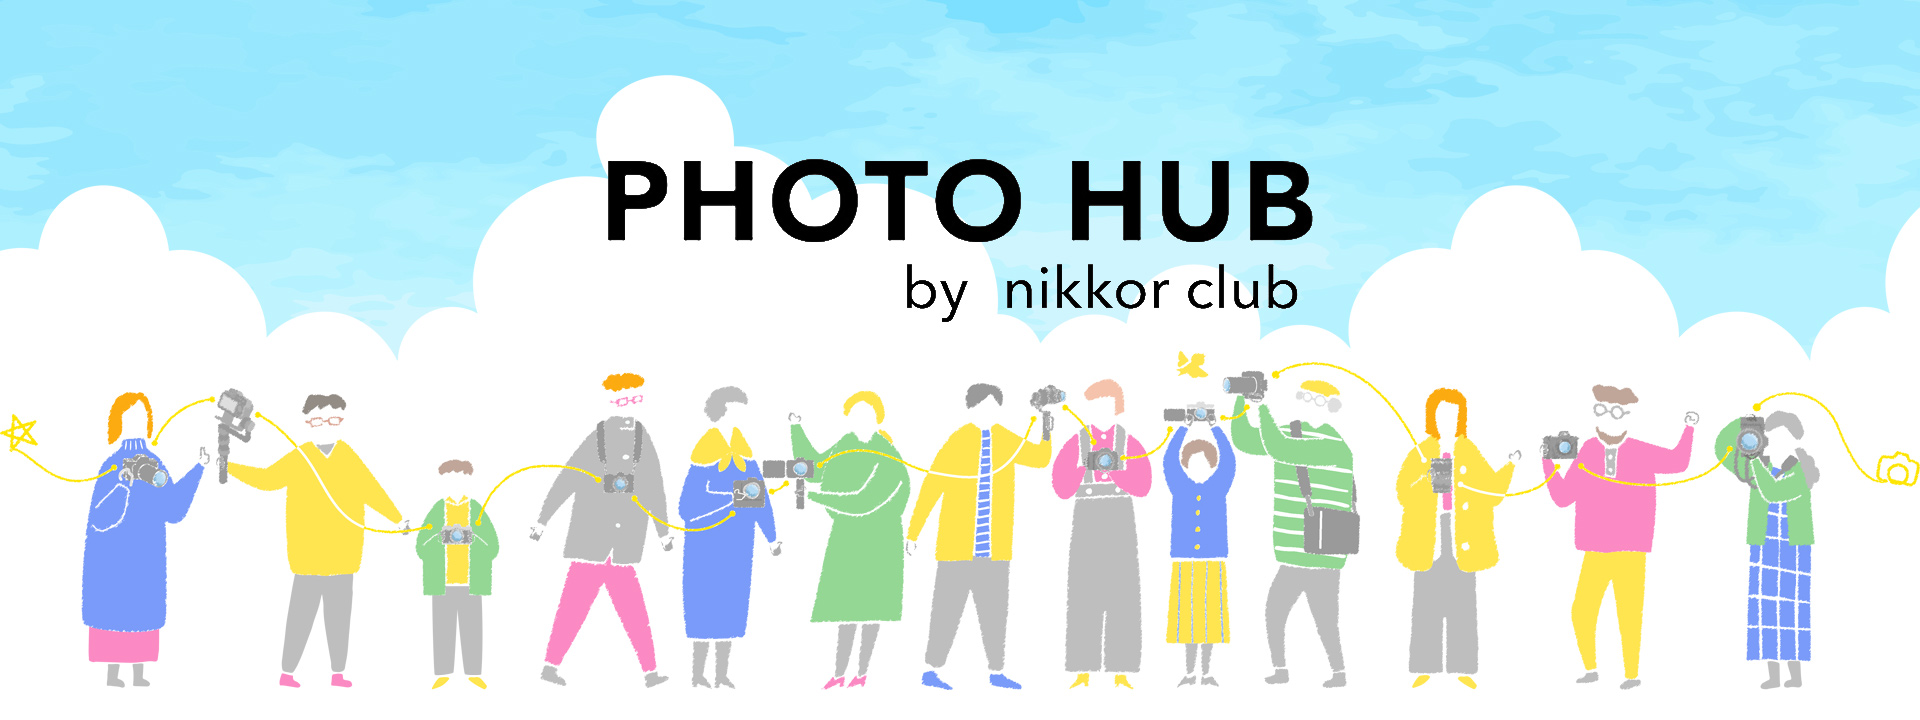 PHOTO HUB by nikkor club